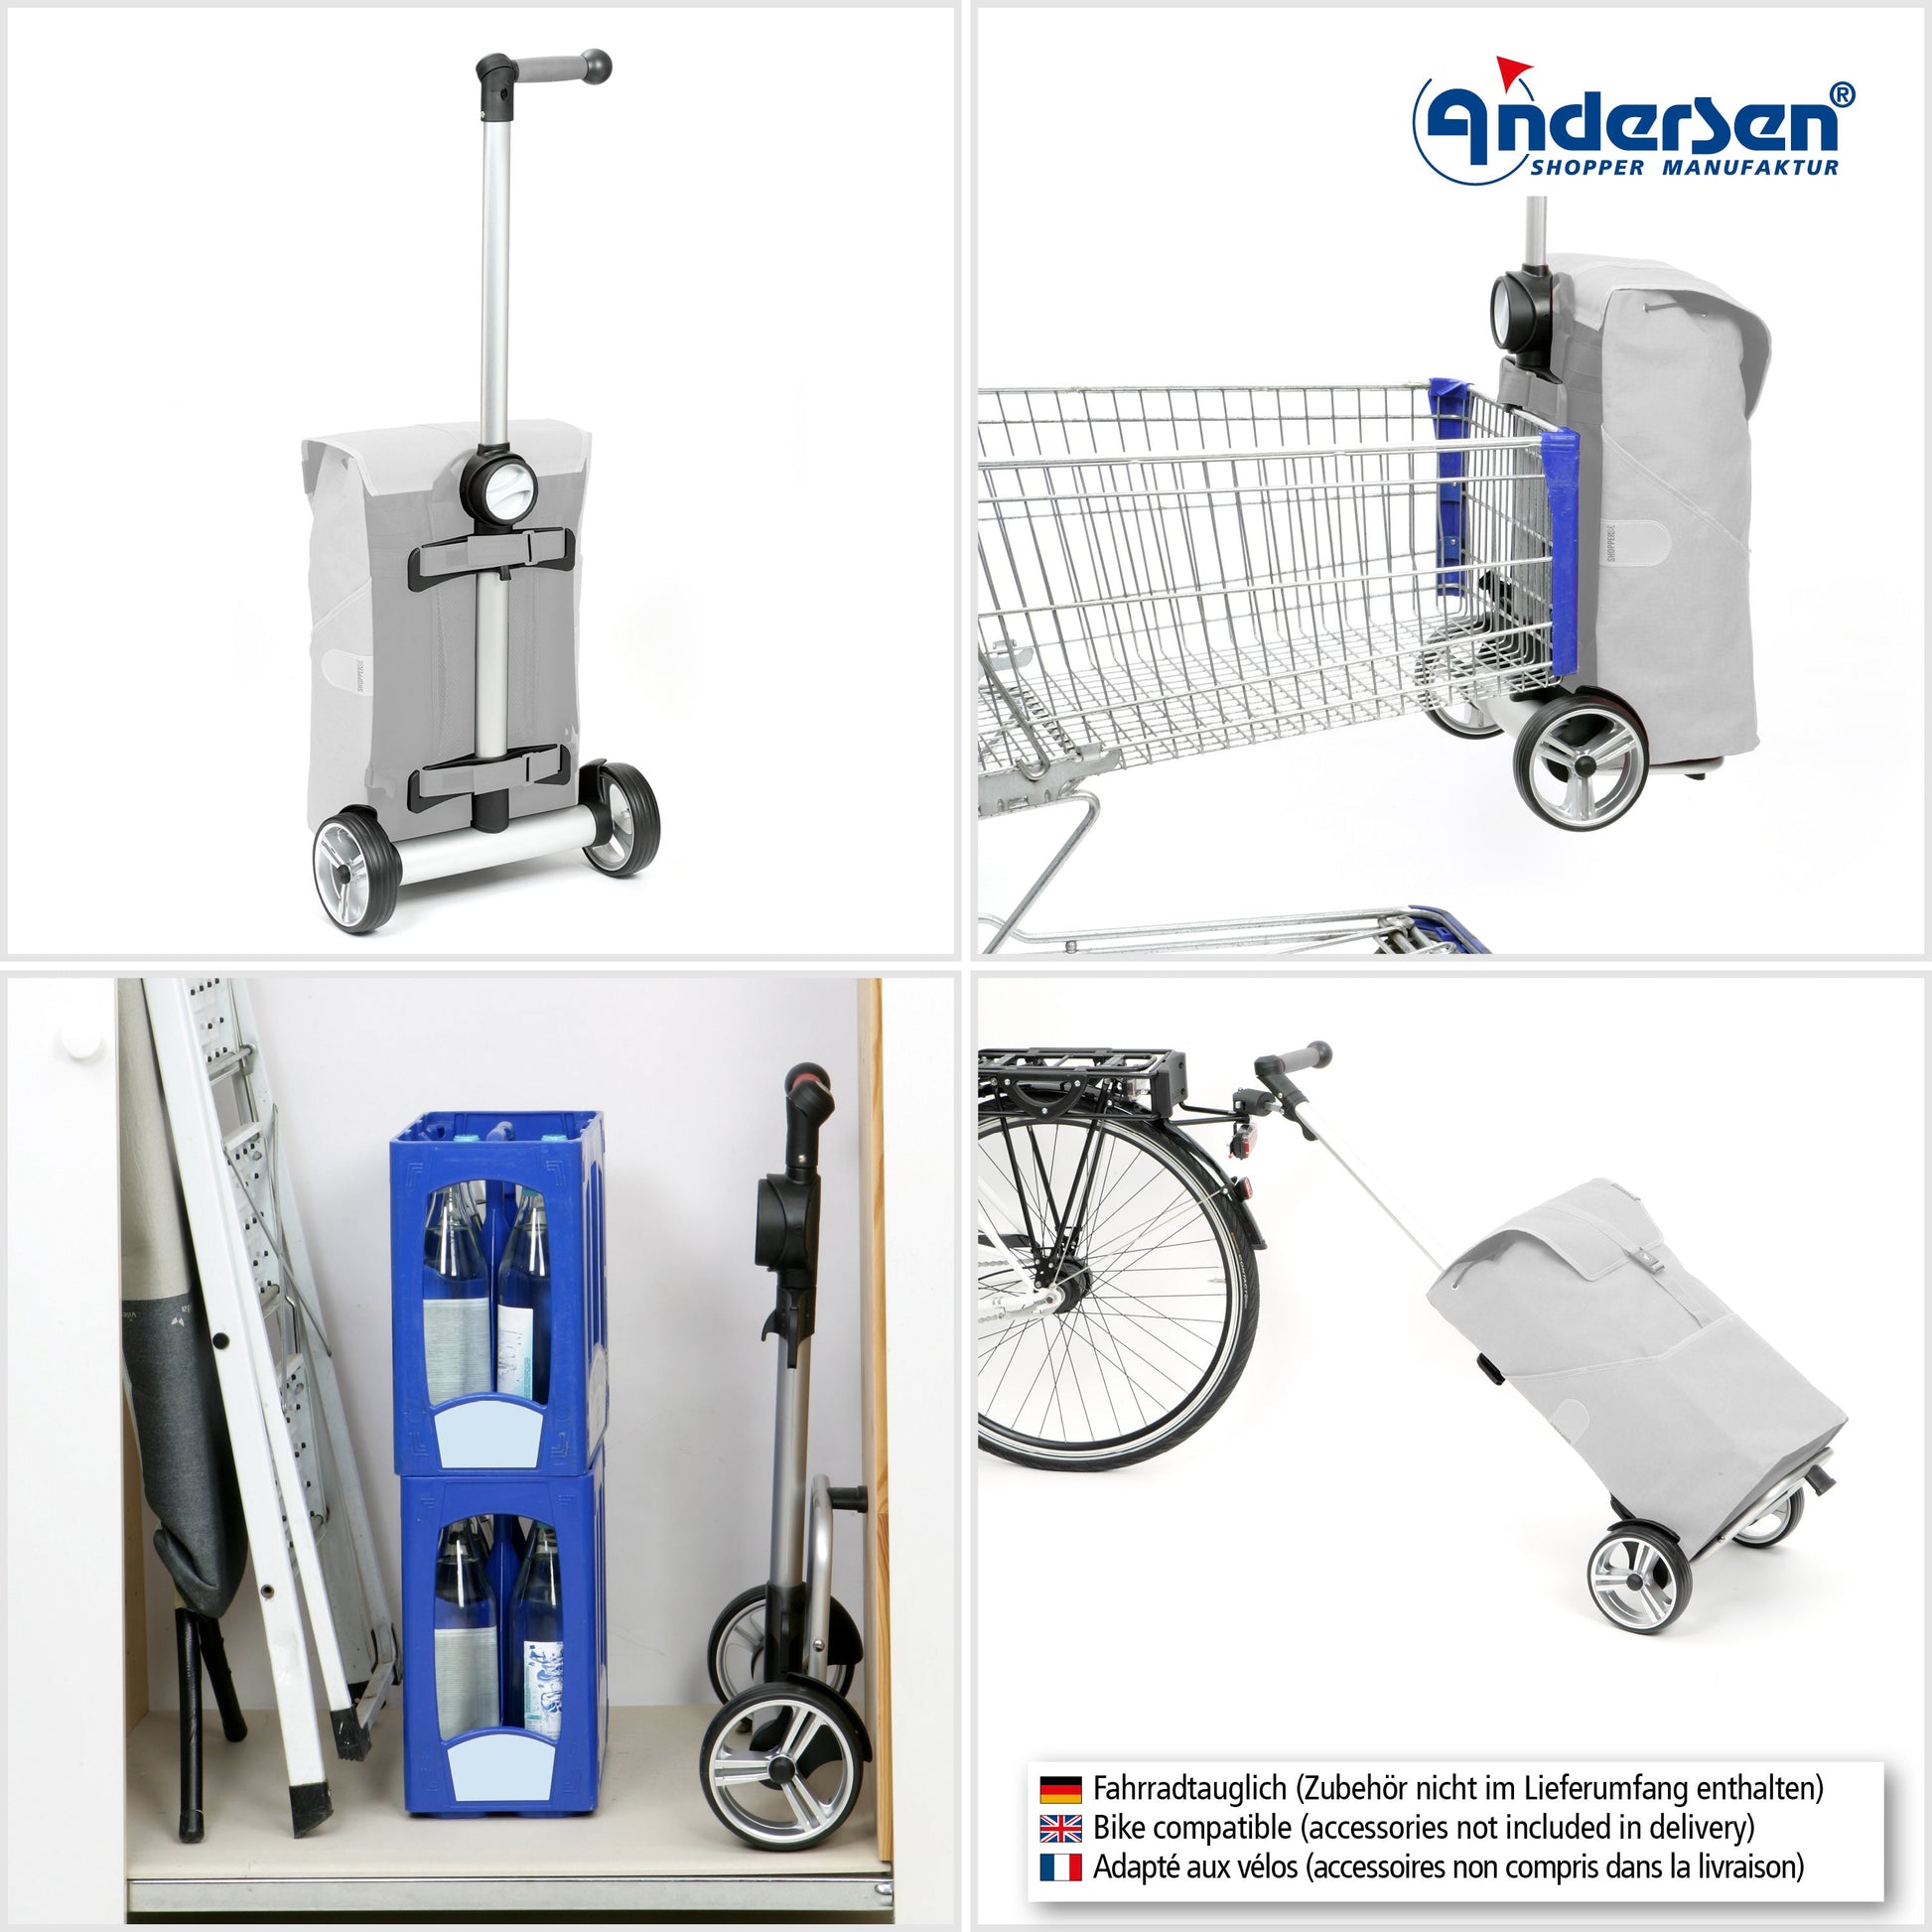 Andersen Shopper Manufaktur-Unus Shopper Silja sage green-www.shopping-trolley.ch-bild5